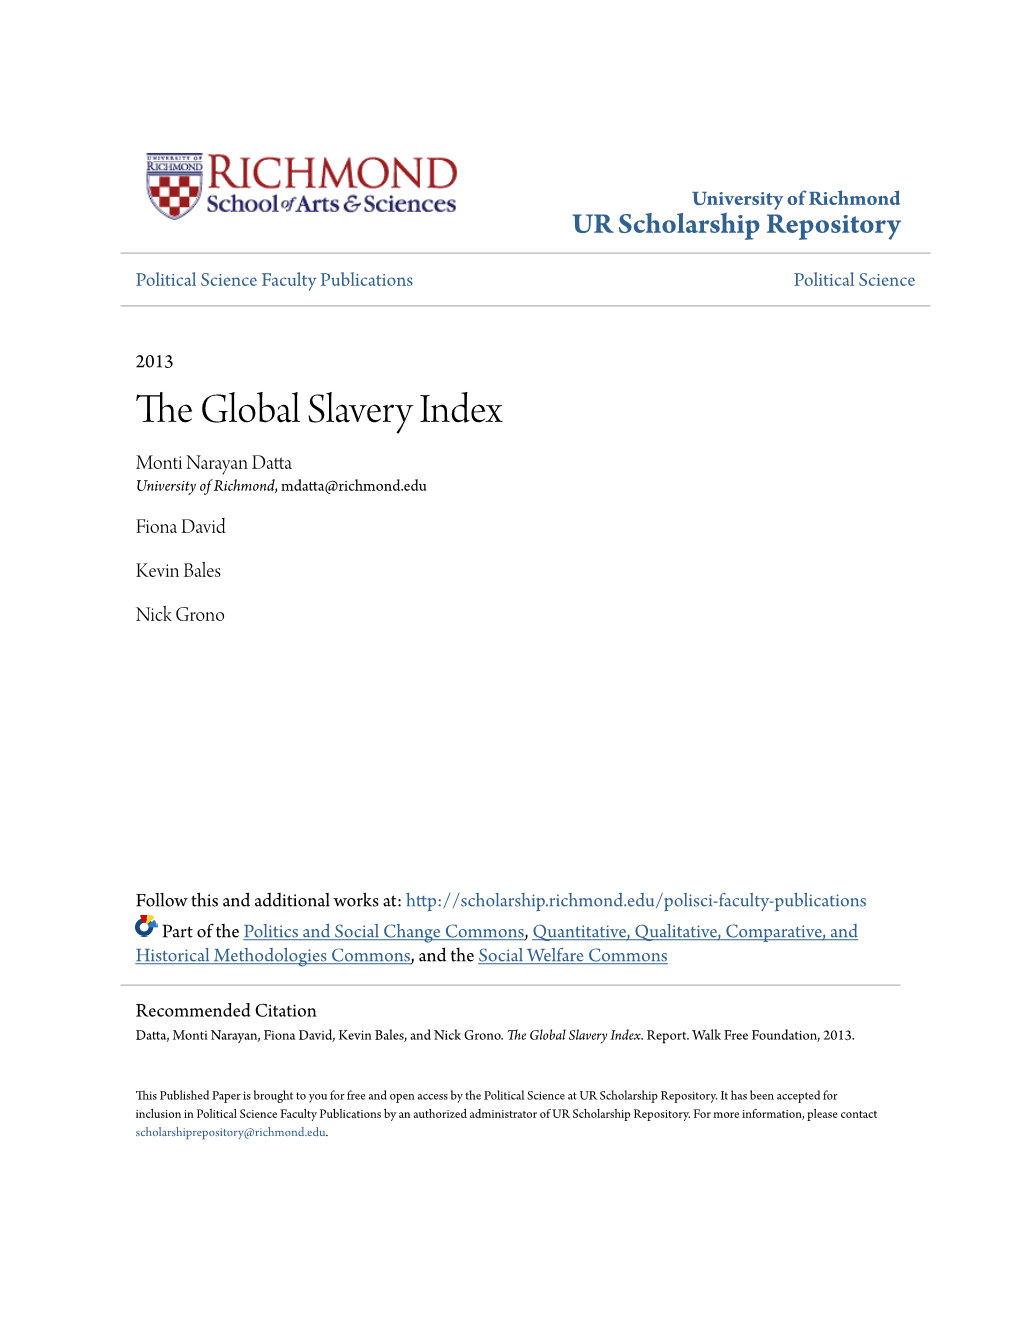 The Global Slavery Index Monti Narayan Datta University of Richmond, Mdatta@Richmond.Edu